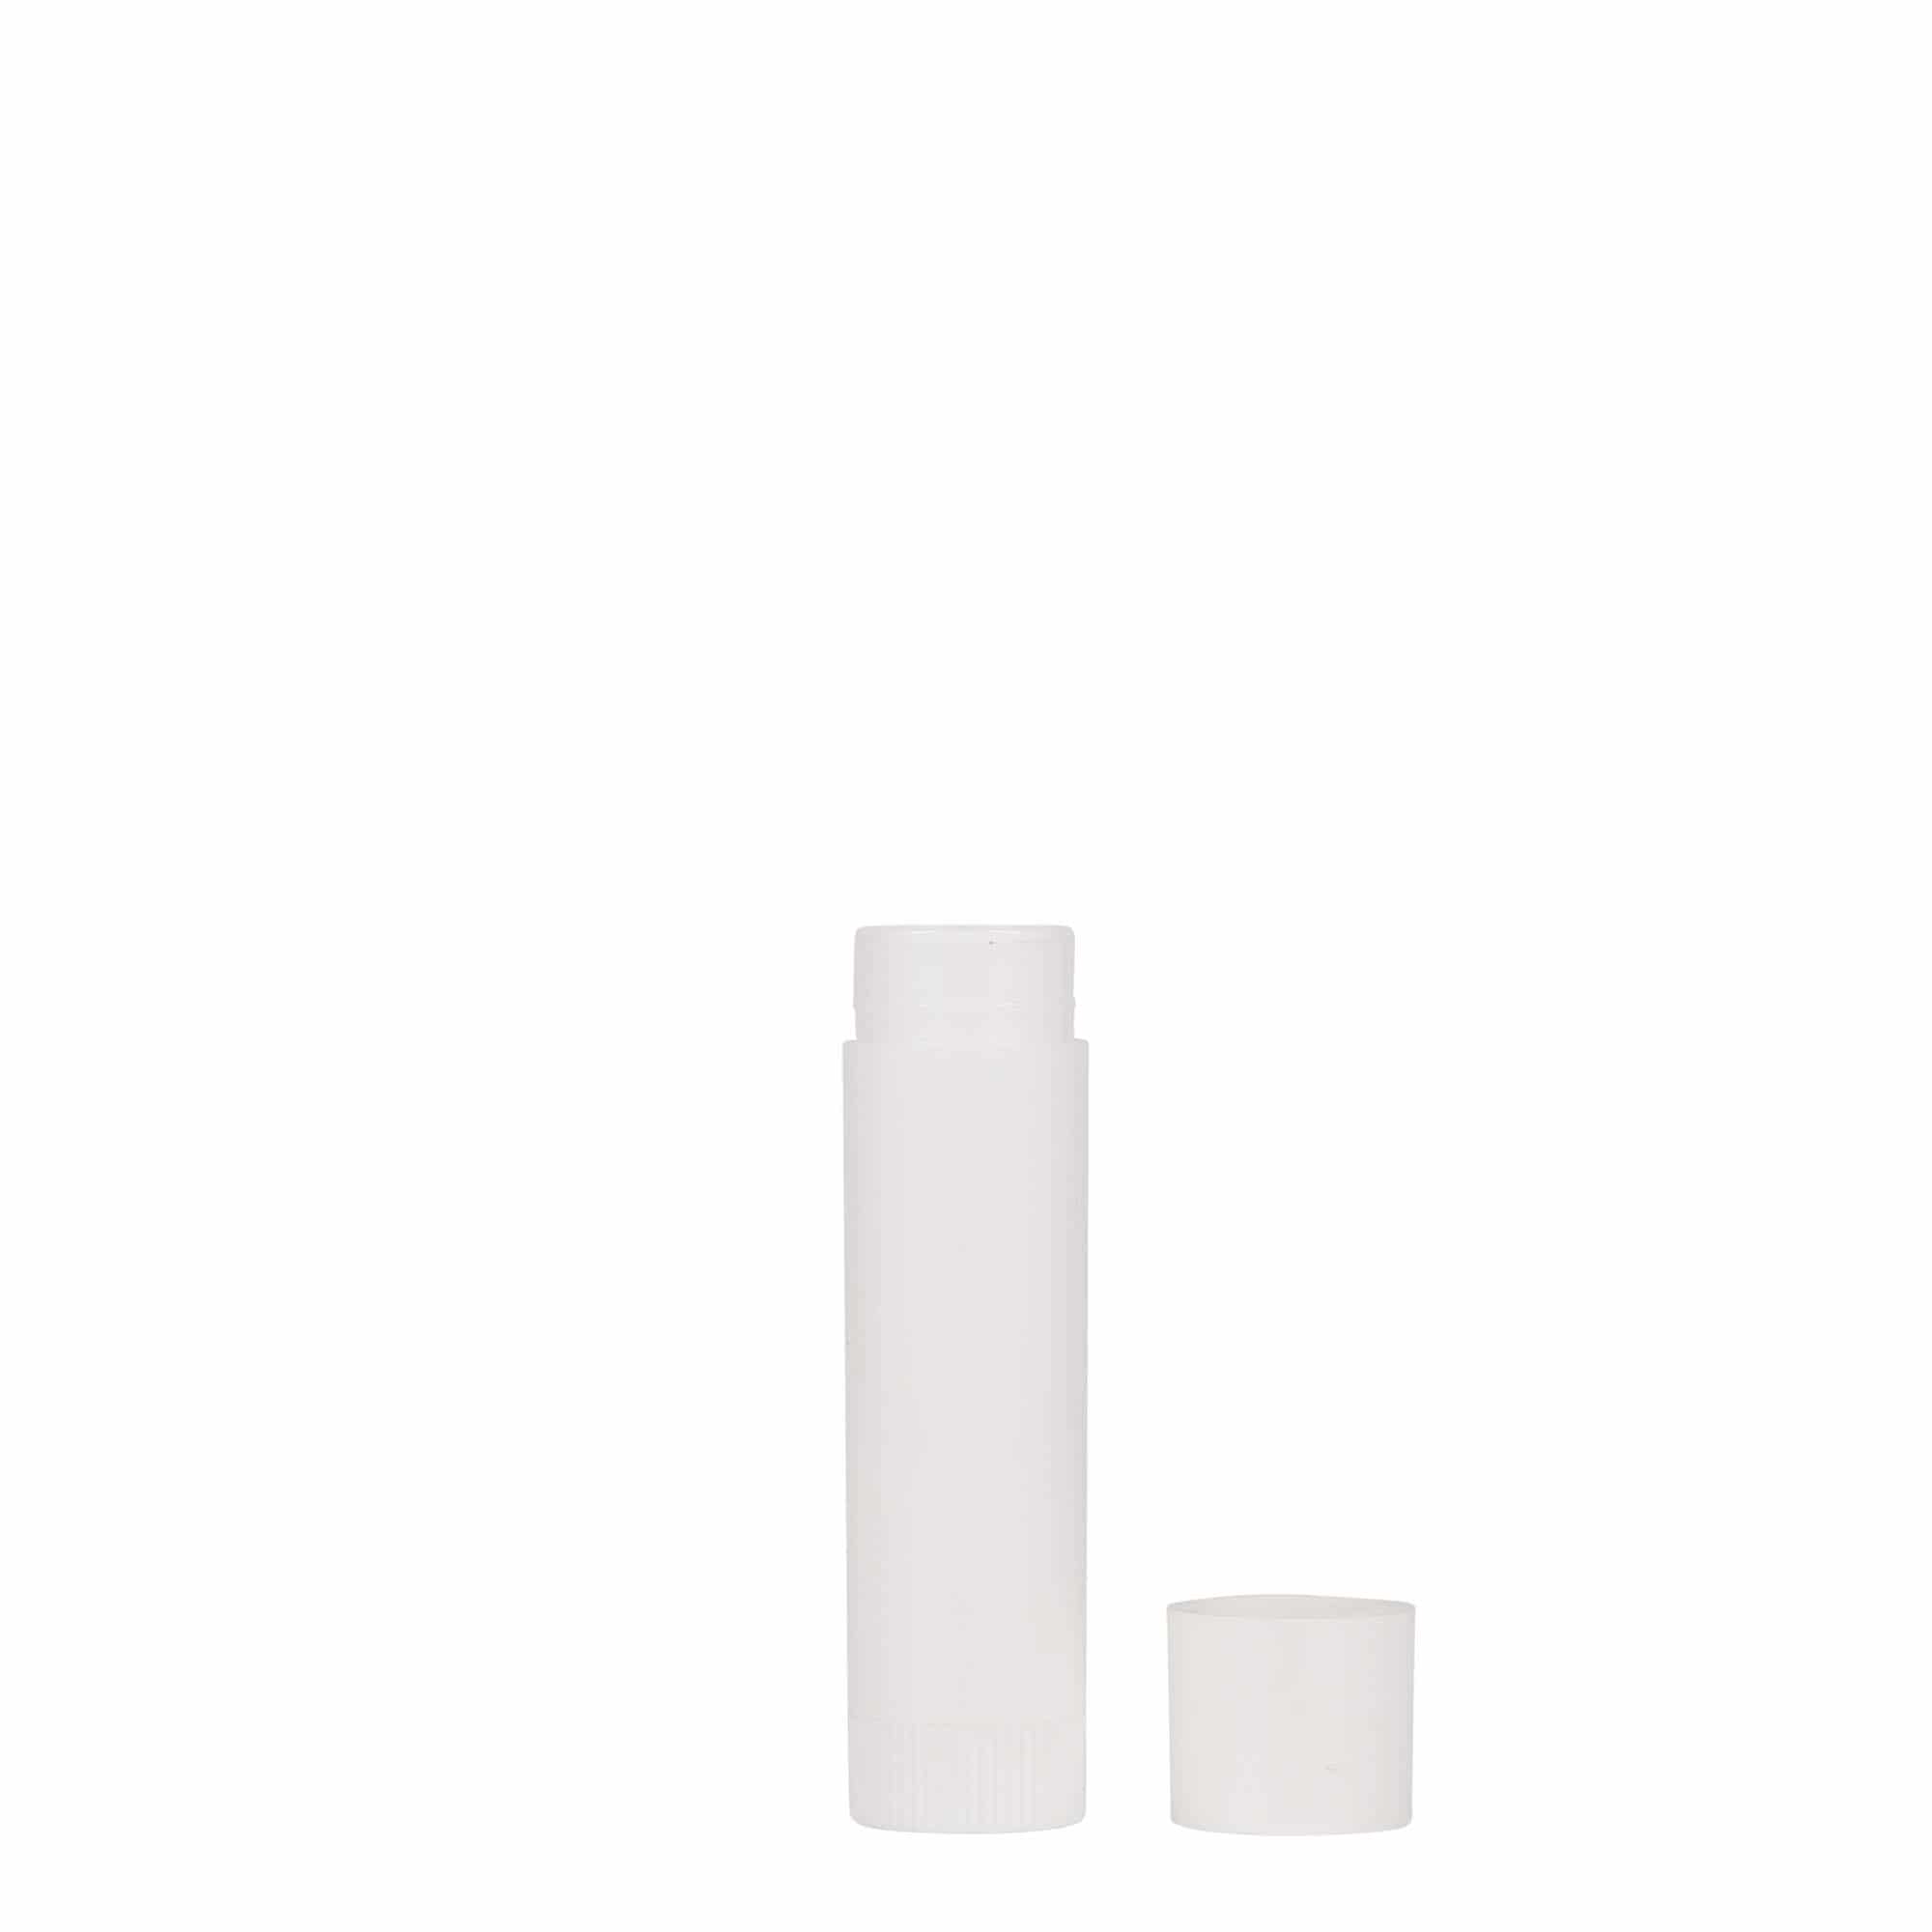 6 ml lipstick container, PP plastic, white